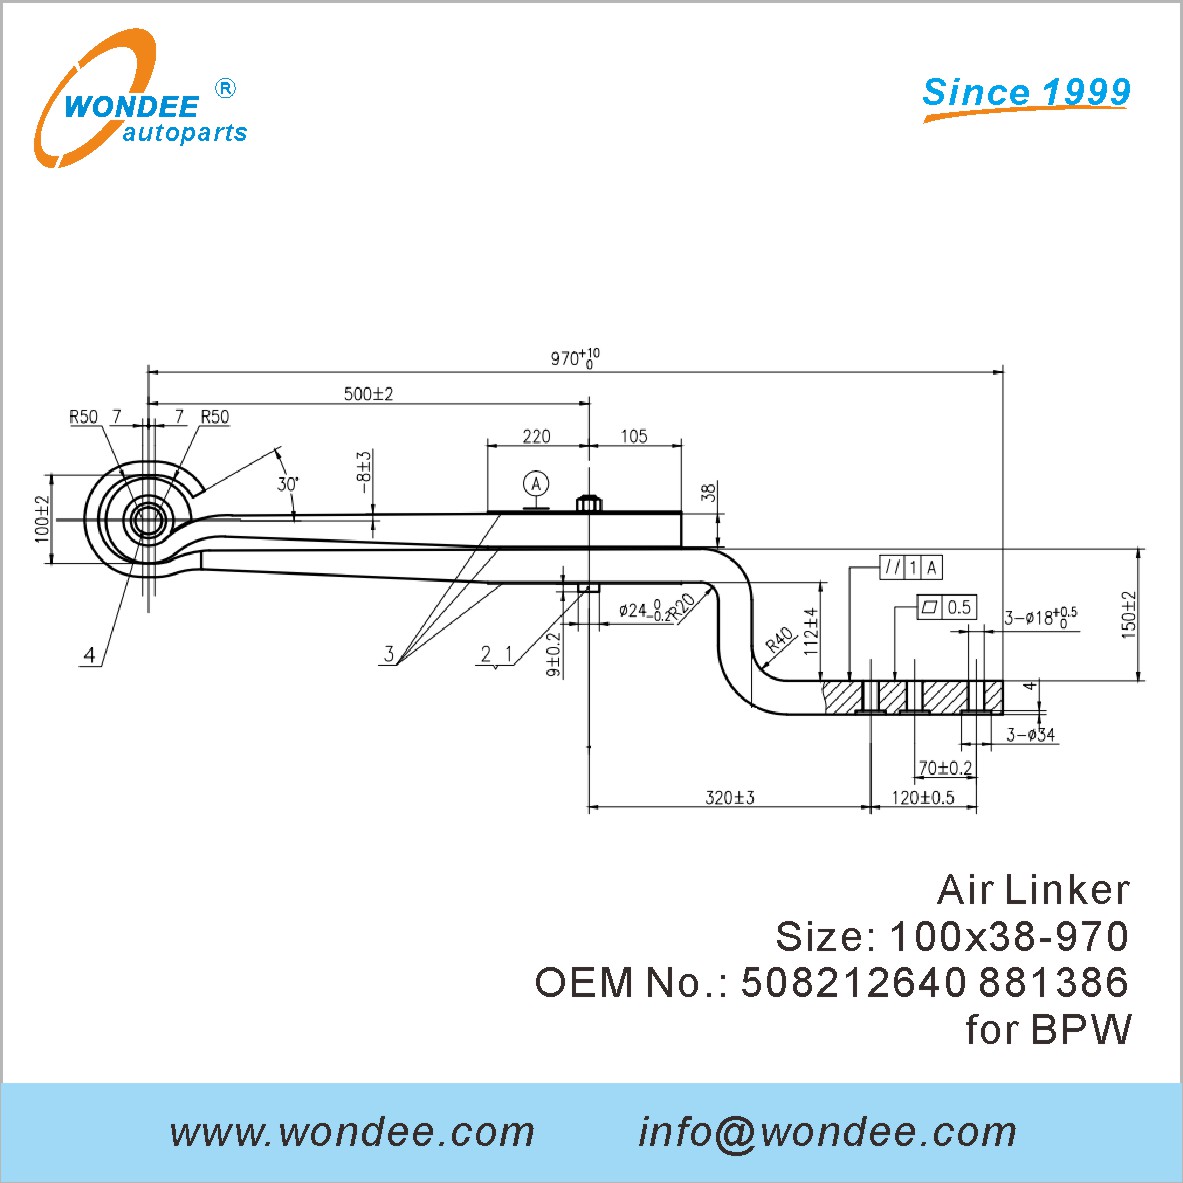 WONDEE Autoparts Air Linker OEM 508212640 881386 for BPW